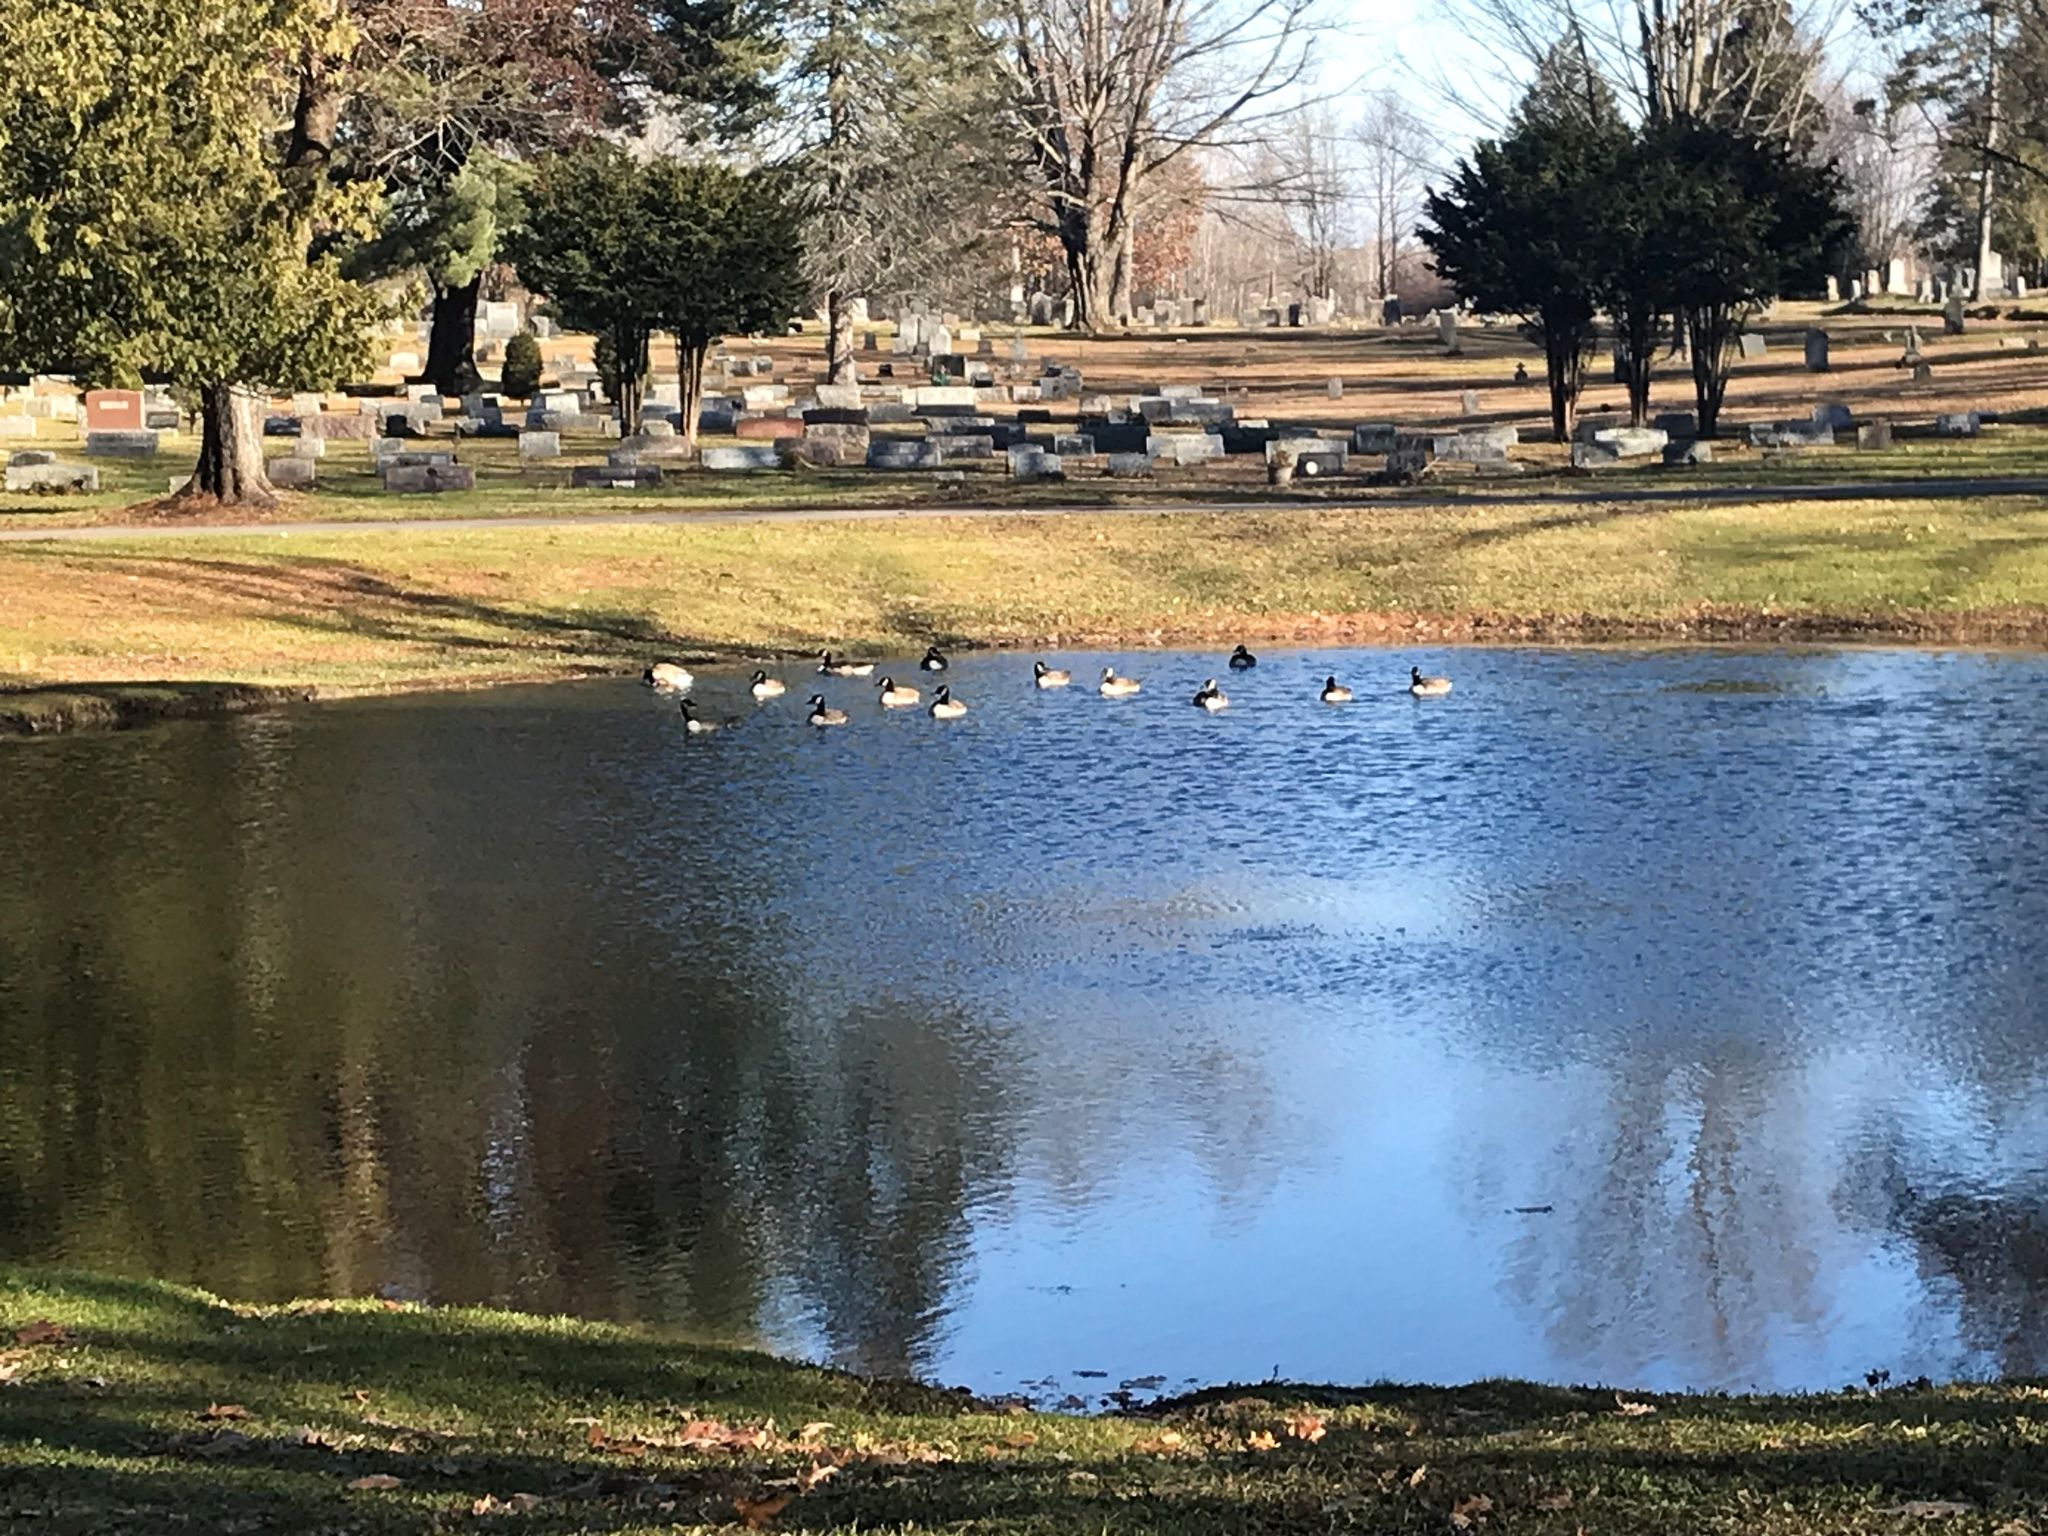 Ducks enjoying the pond